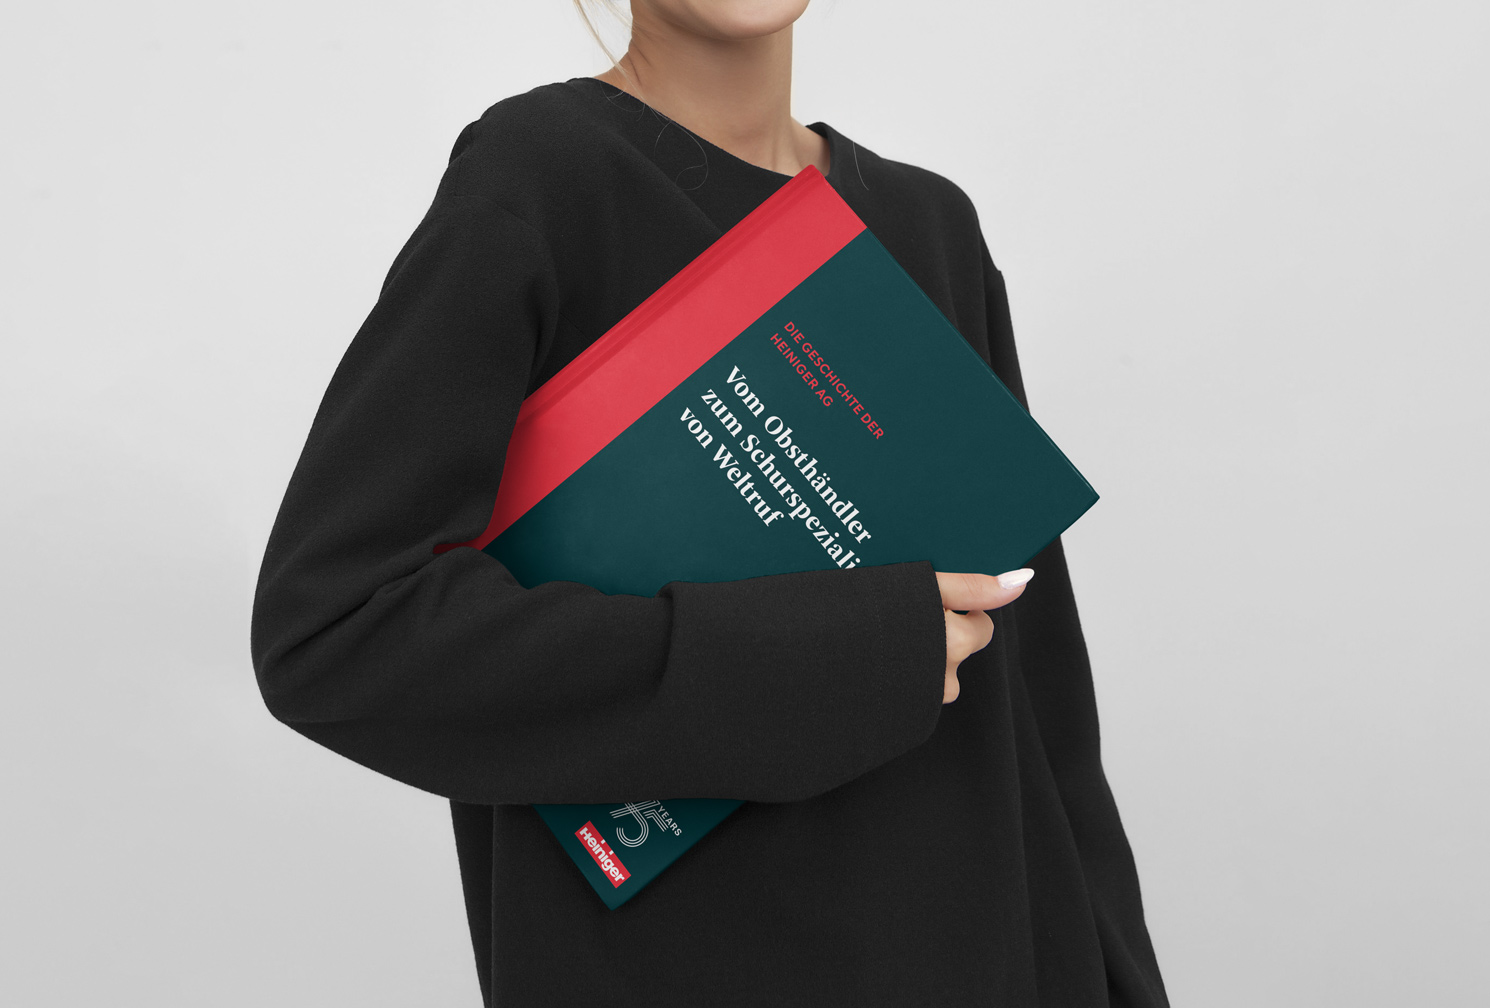 Heiniger AG, Frau hält Jubiläumsbuch unter dem Arm, Editorial Design